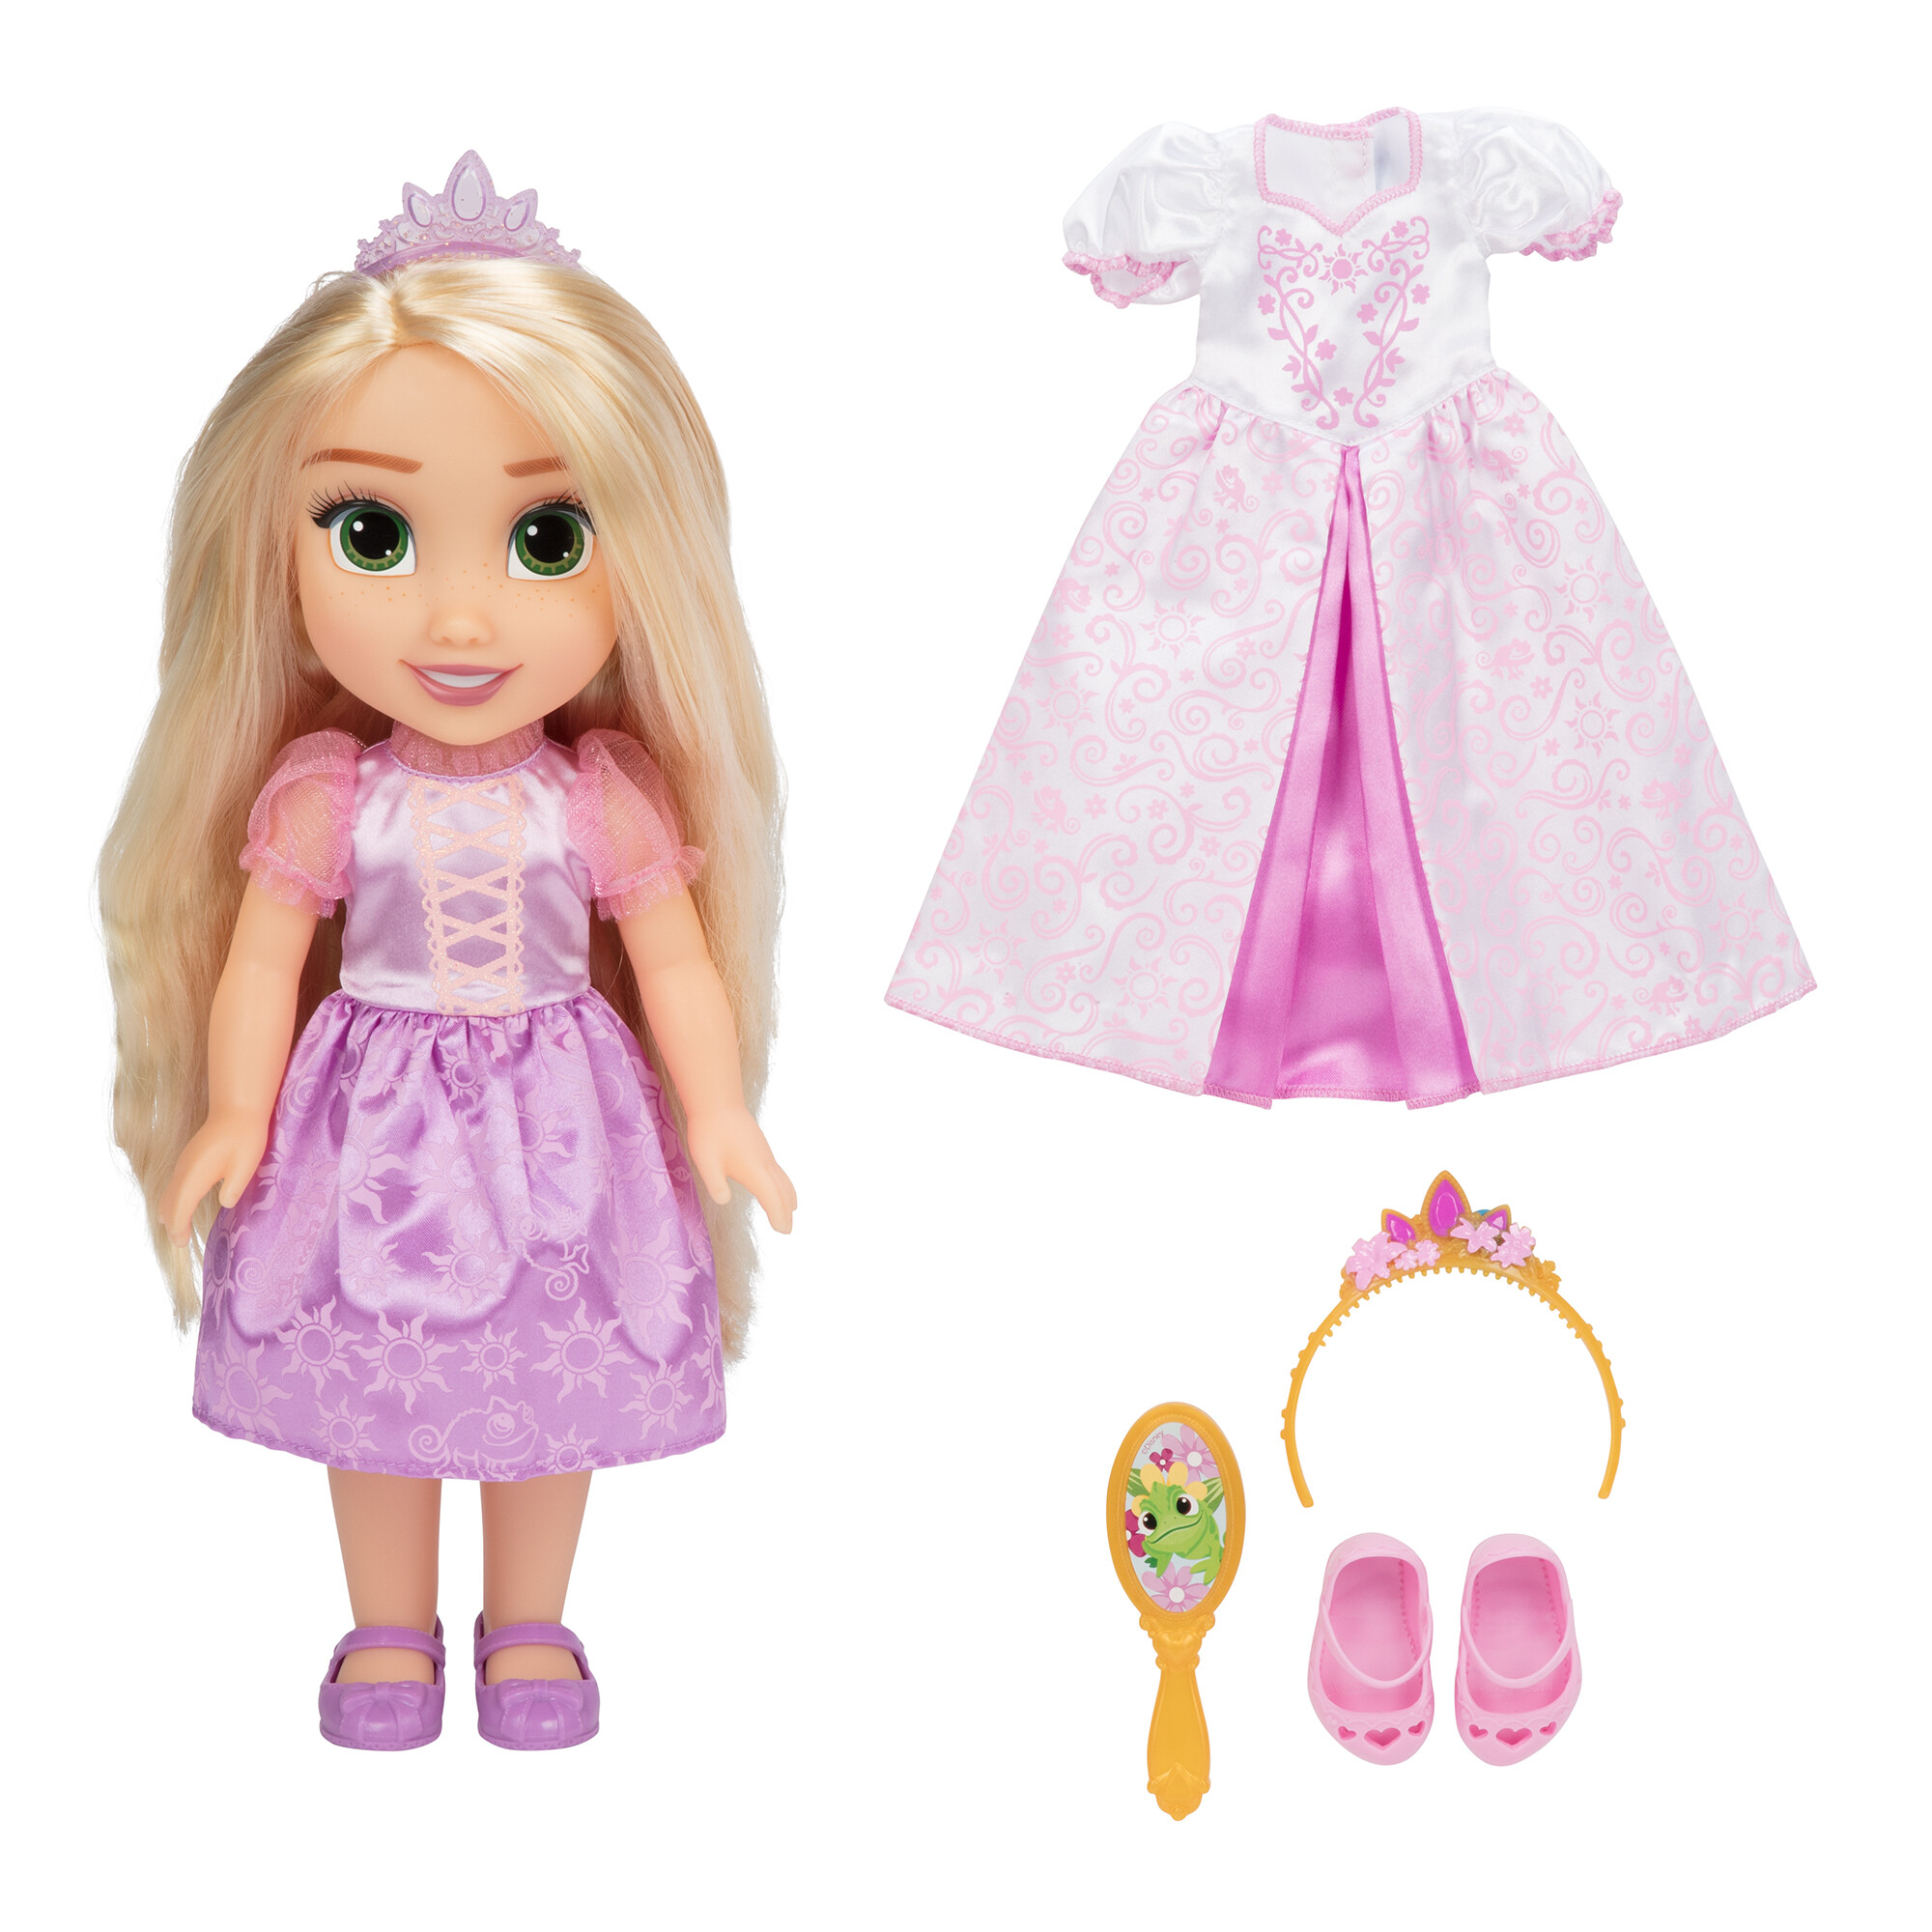 Disney princess bambola da 38 cm di rapunzel con accessori - DISNEY PRINCESS